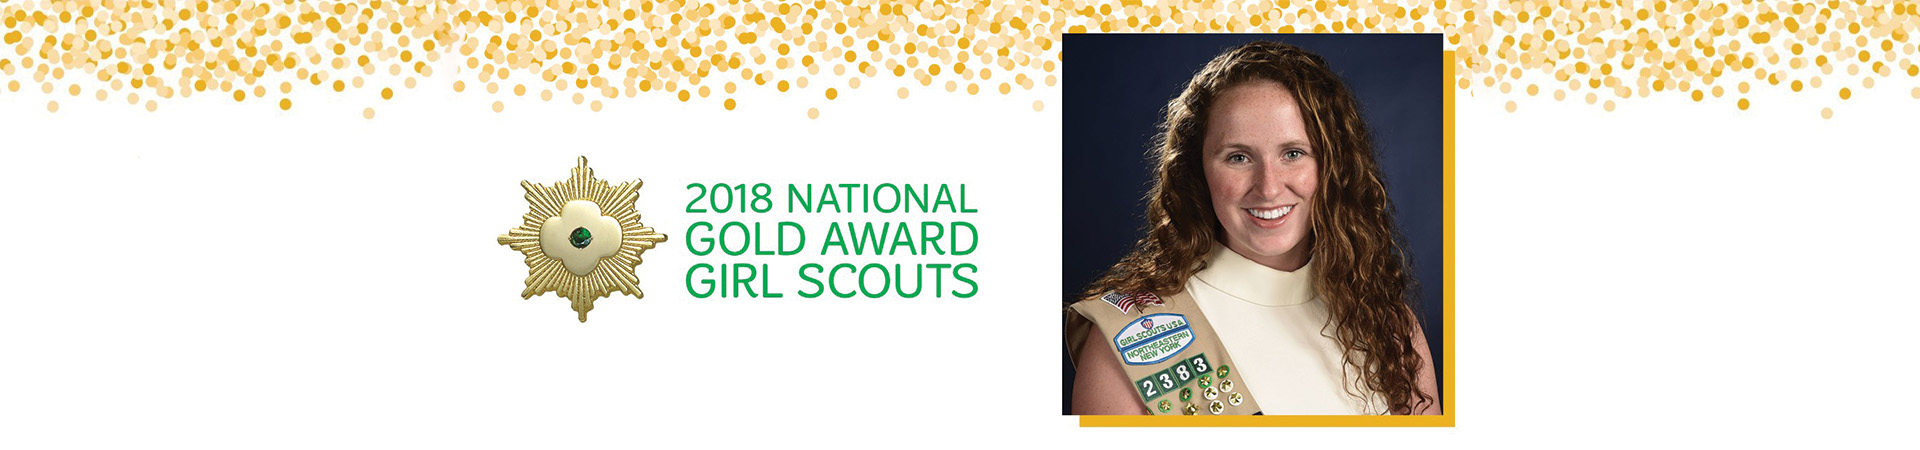  Gold Award Girl Scout Caroline 